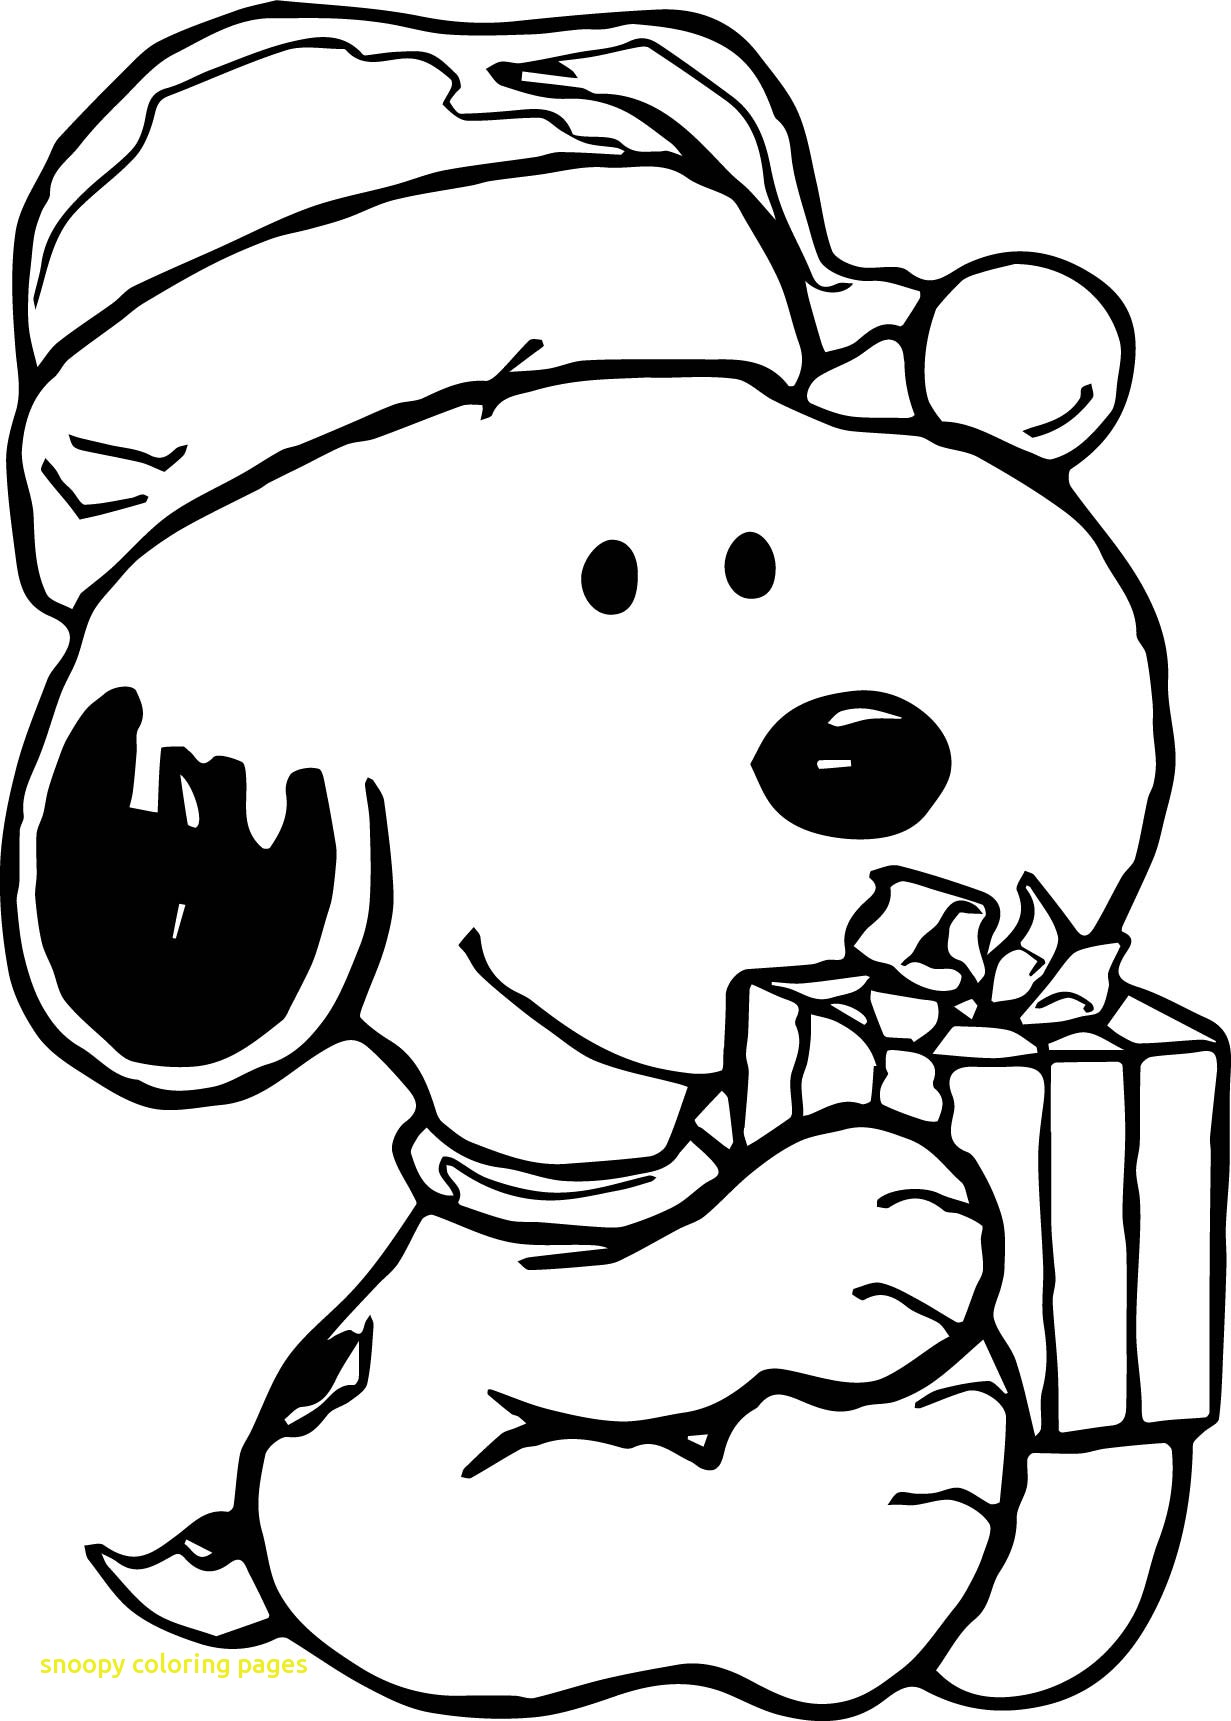 Snoopy Christmas Coloring Pages Printable - Printable World Holiday